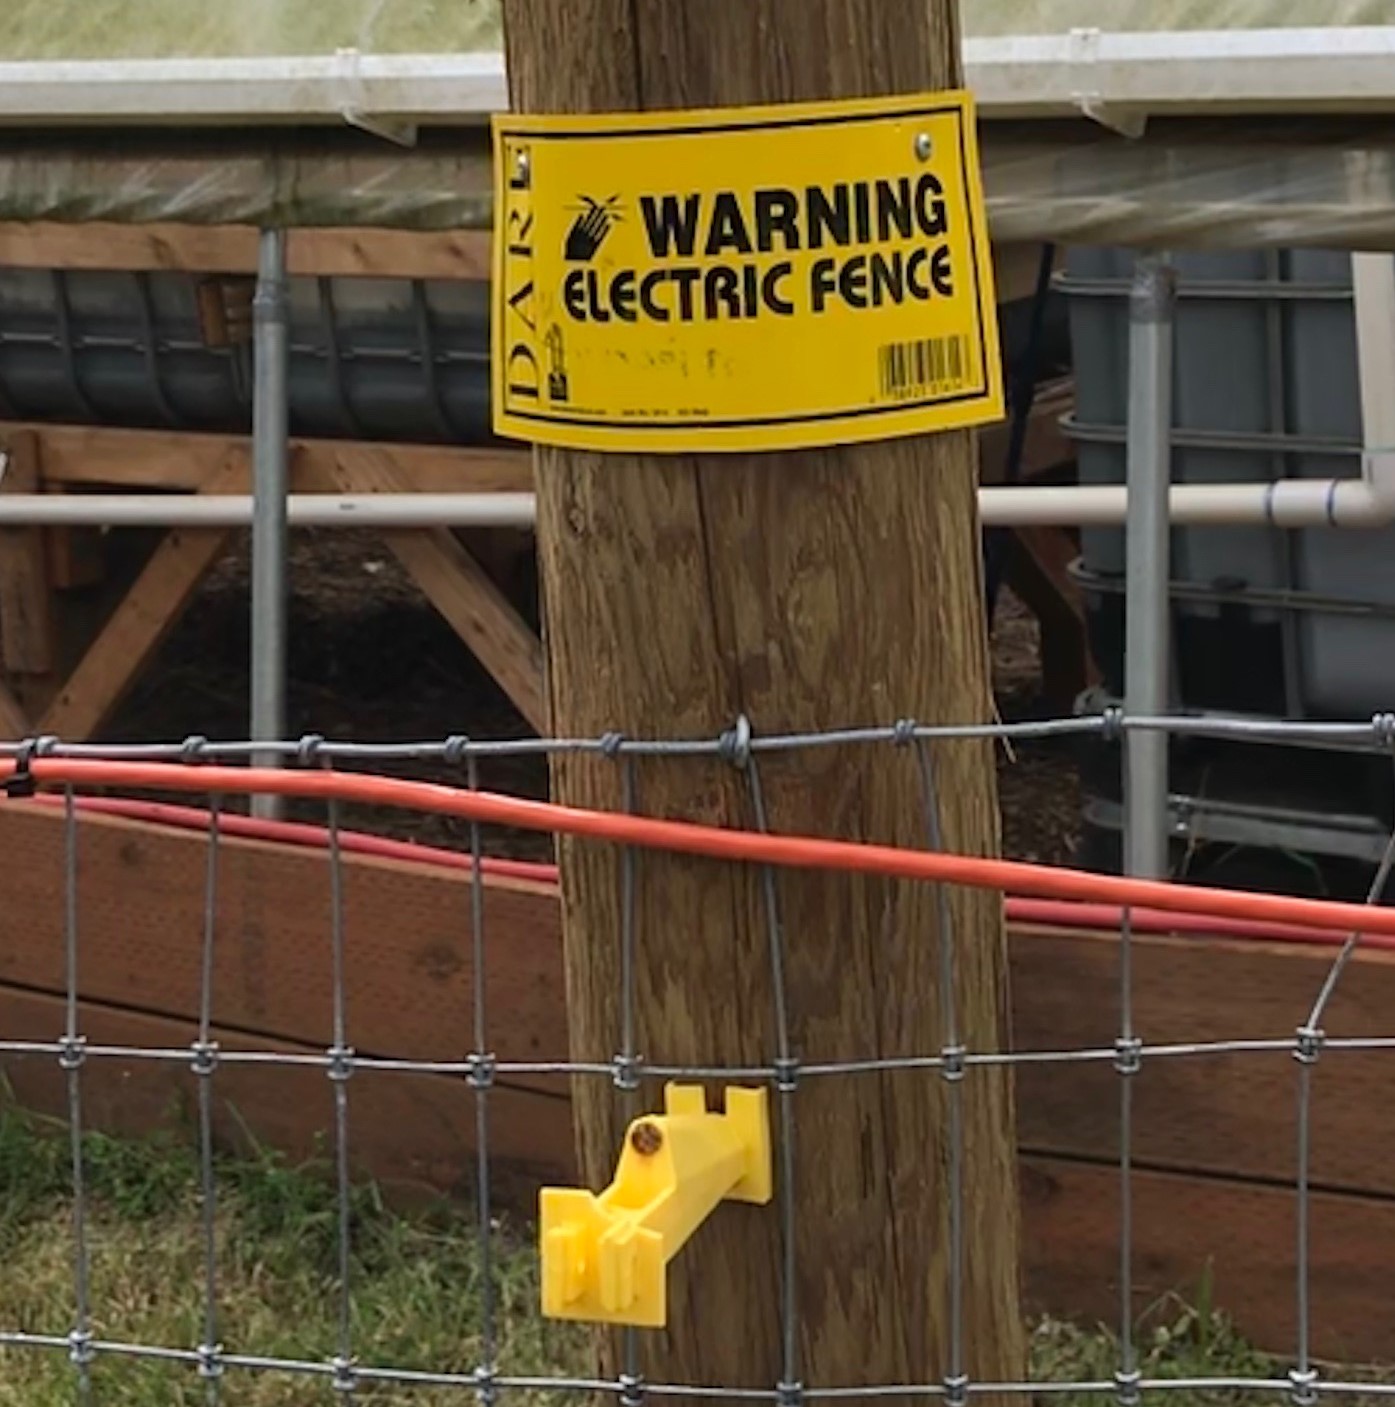 Electrified fence warning sign